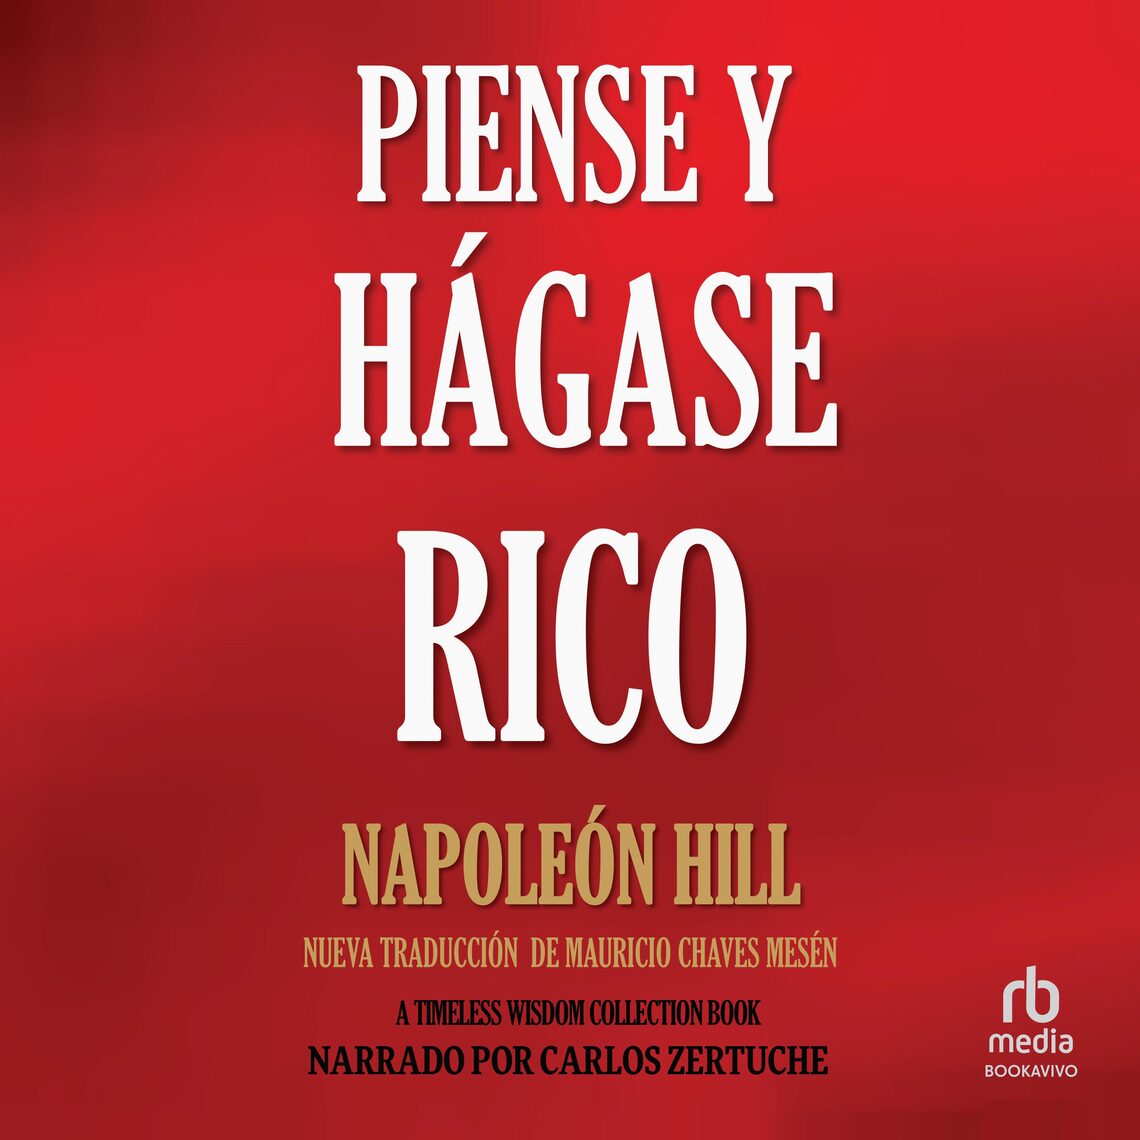 Piense y Hágase Rico (Think and Grow Rich) by Napoleon Hill